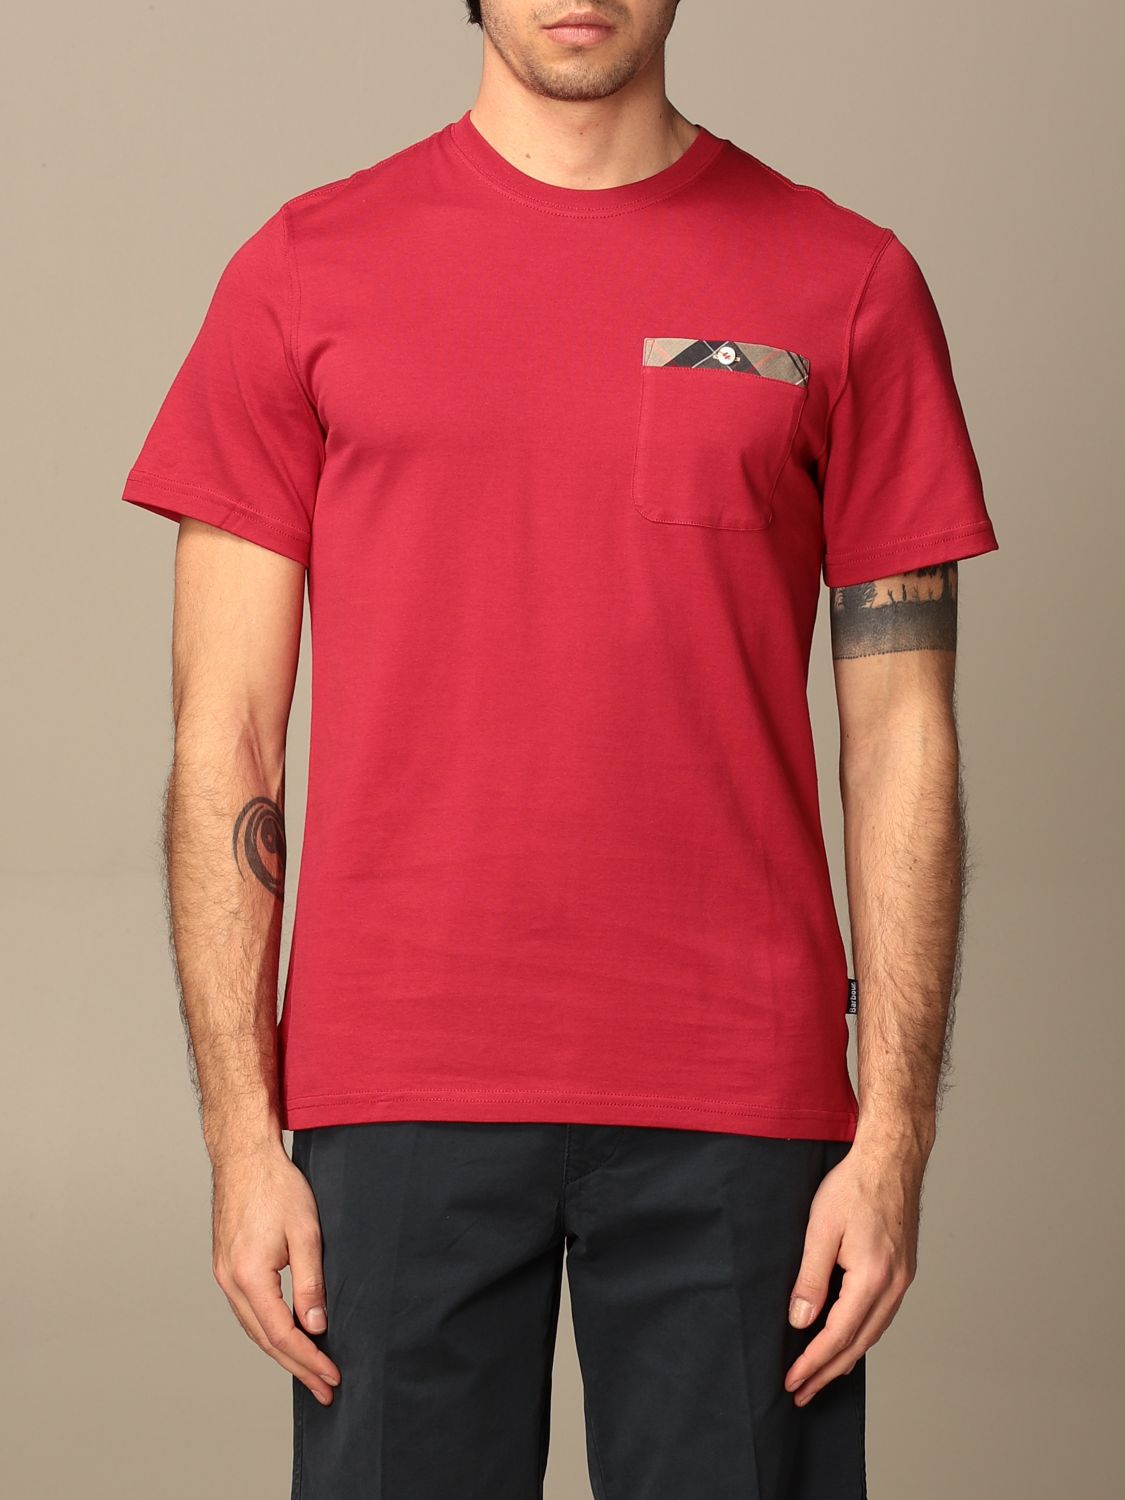 T-Shirt Barbour: T-shirt herren Barbour rot 1